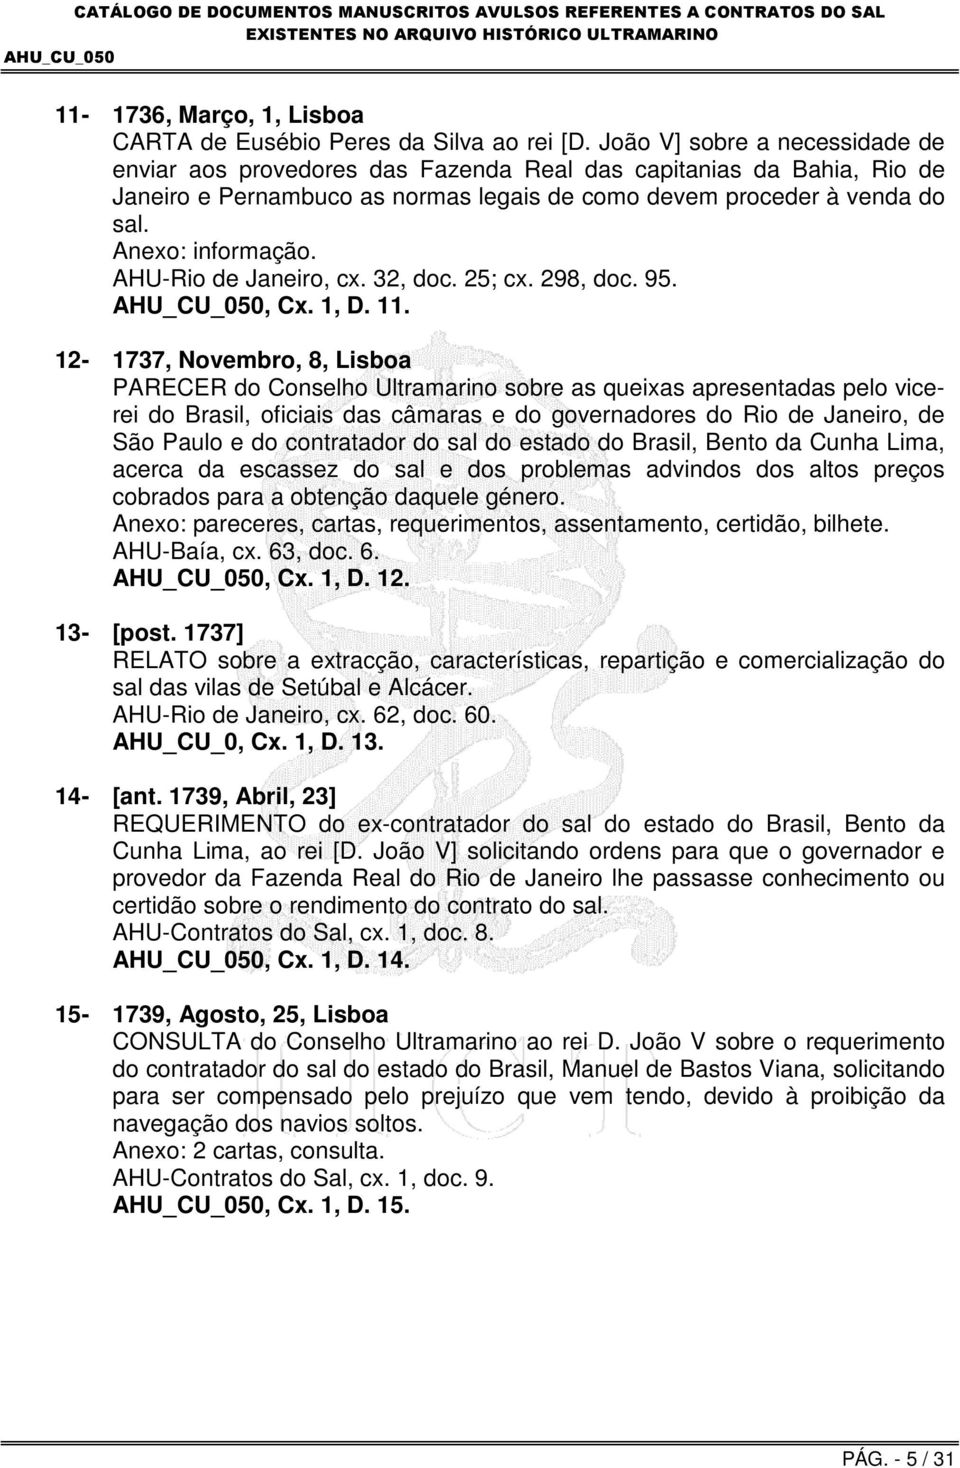 AHU-Rio de Janeiro, cx. 32, doc. 25; cx. 298, doc. 95., Cx. 1, D. 11.